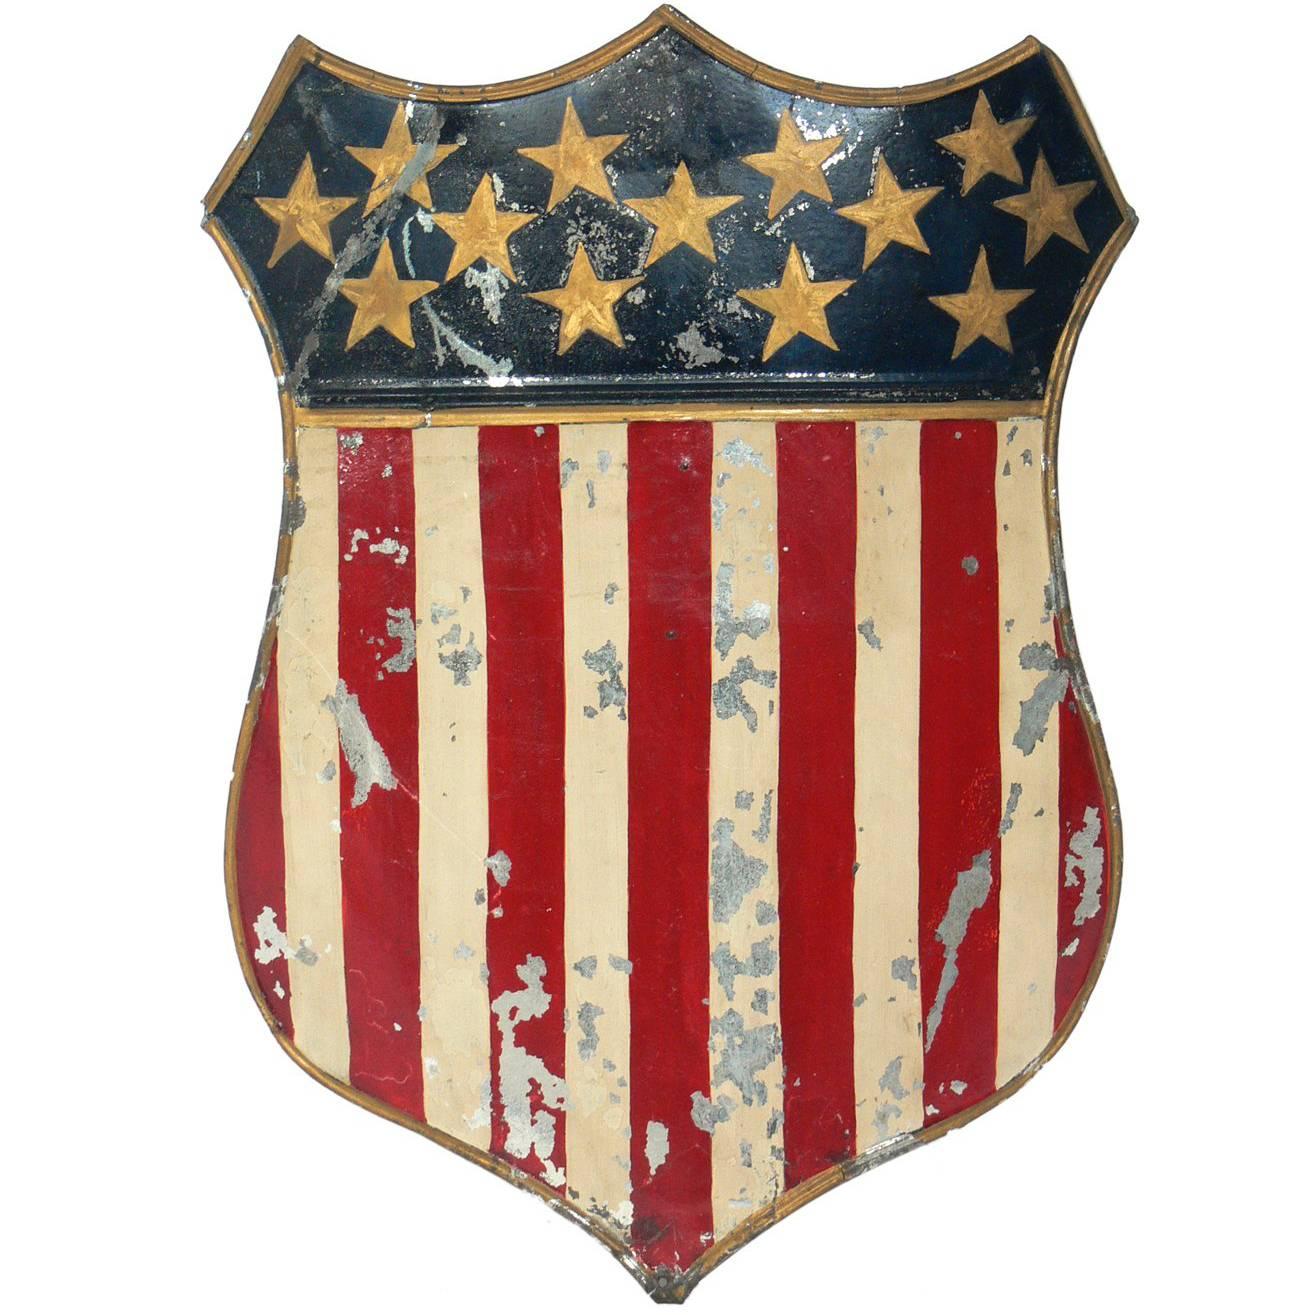 American Centennial Folk Art 13 Star Metal Shield Documented PA 1876